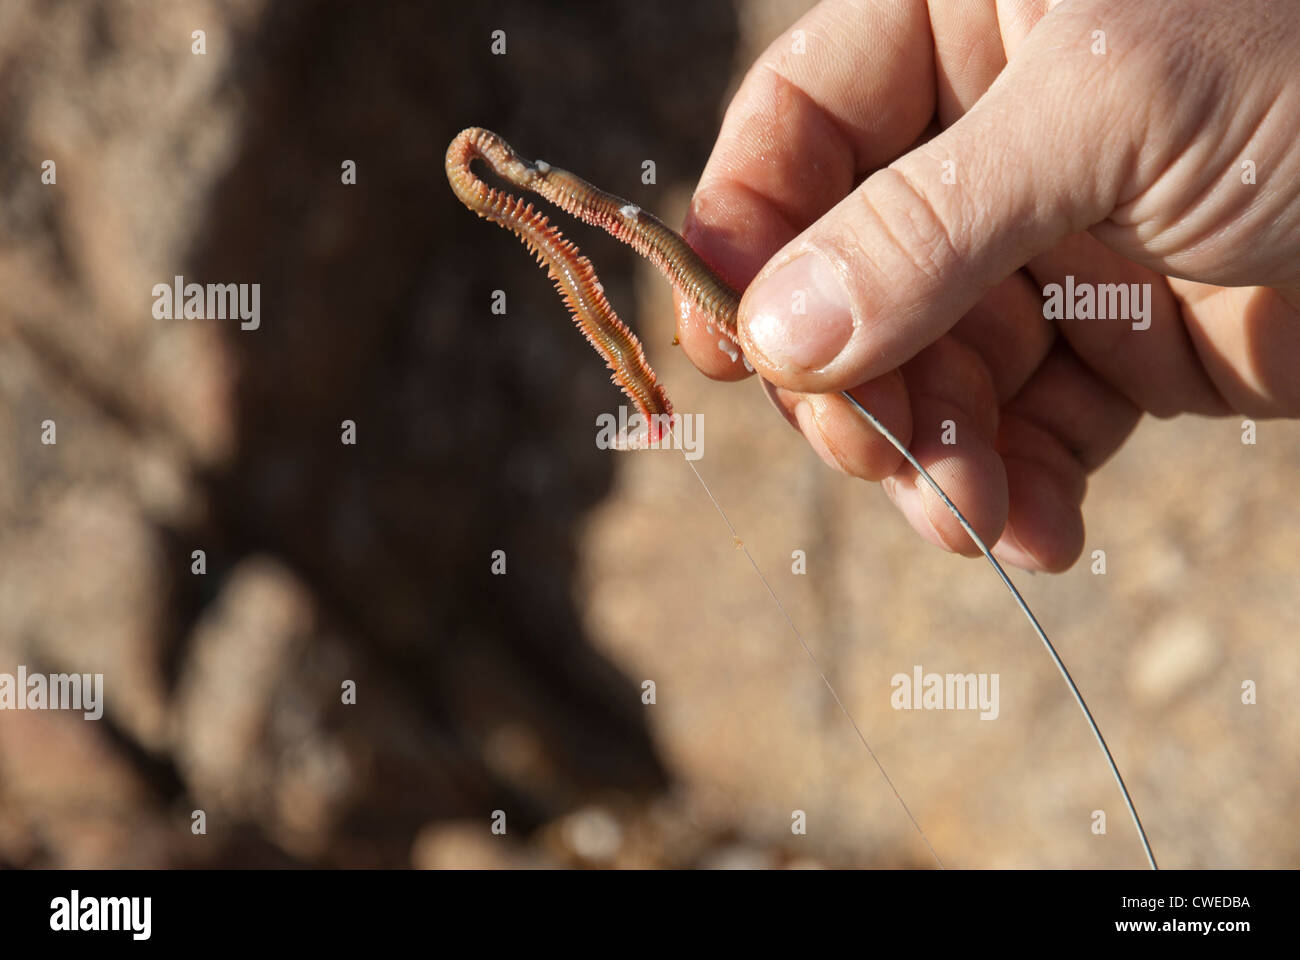 https://c8.alamy.com/comp/CWEDBA/baiting-hook-with-worm-fishing-close-up-porto-portugal-CWEDBA.jpg